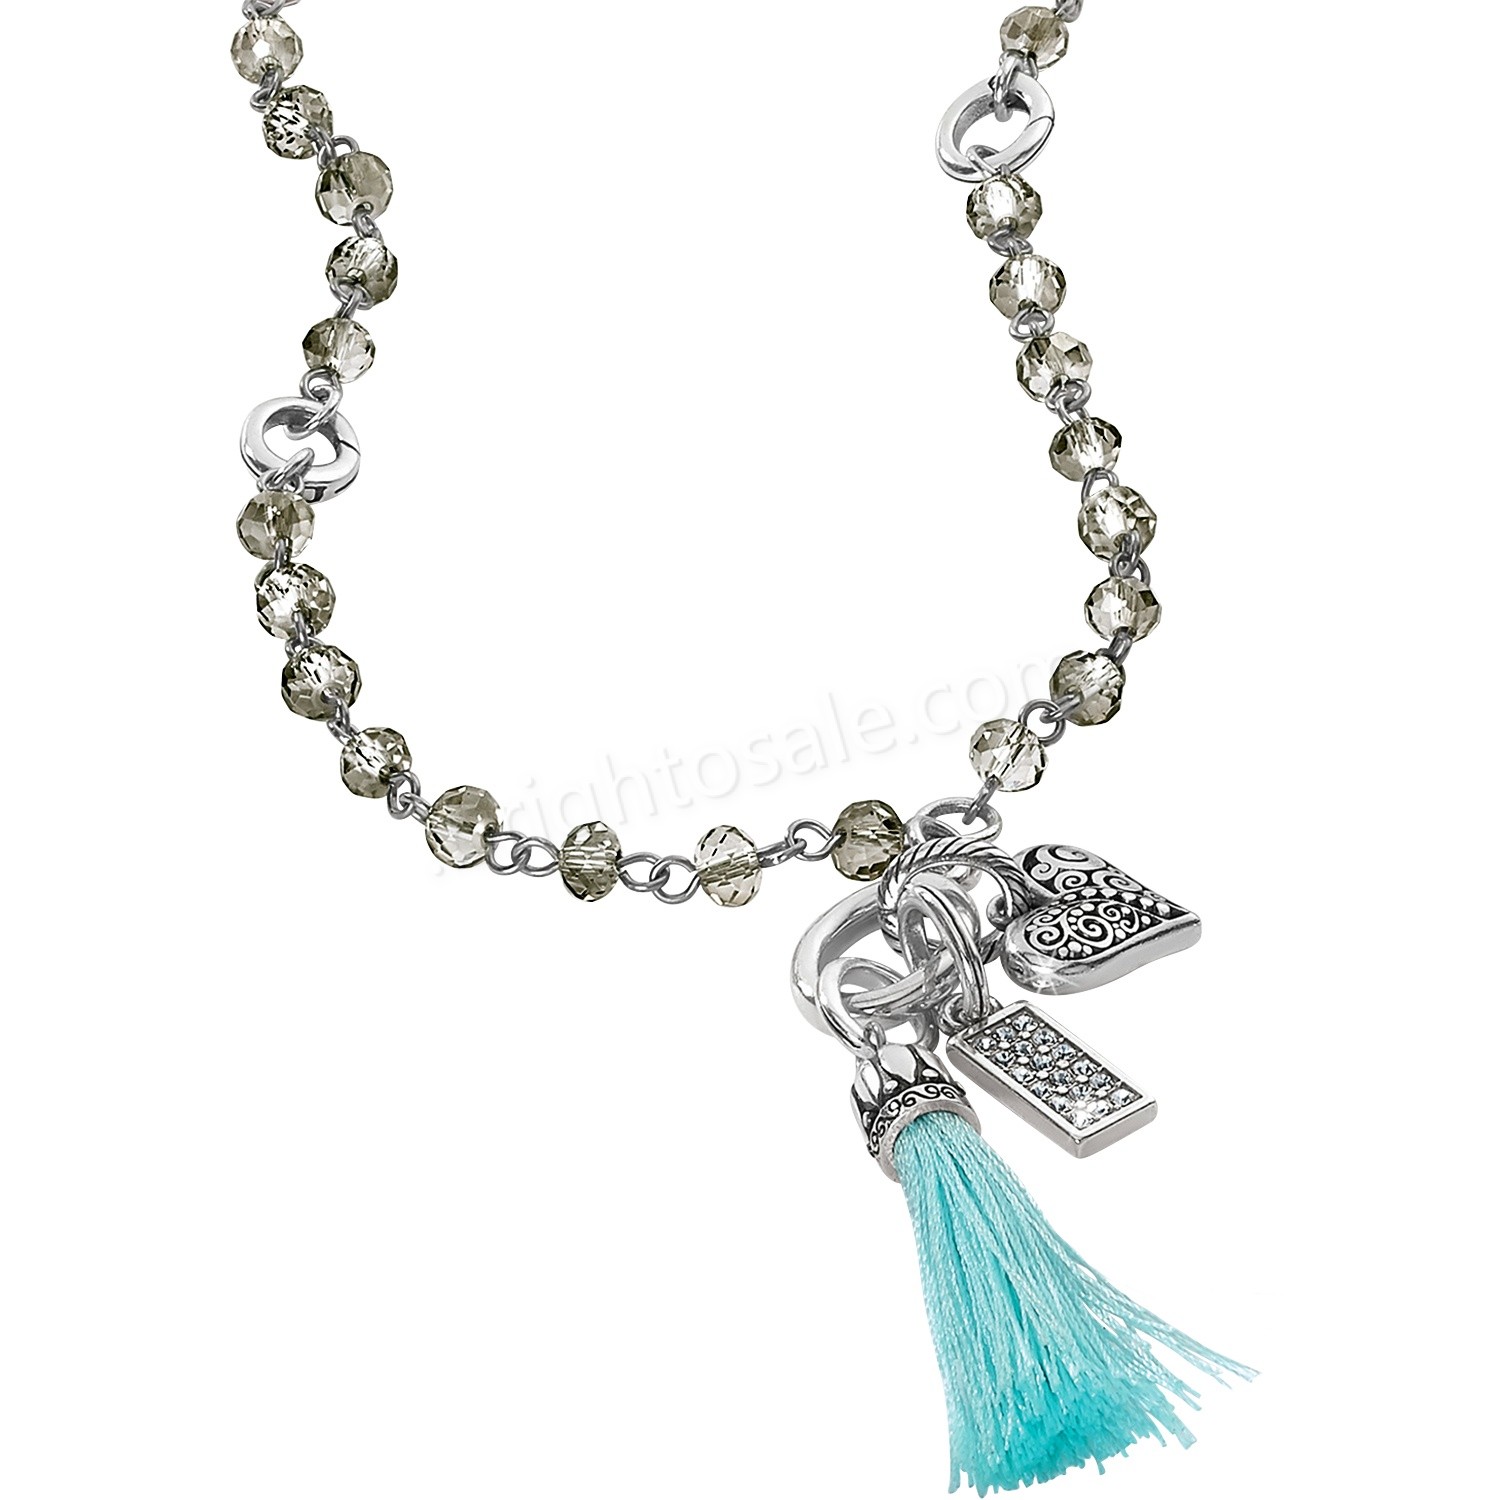 Brighton Collectibles & Online Discount Virtue Amulet Necklace Gift Set - Brighton Collectibles & Online Discount Virtue Amulet Necklace Gift Set